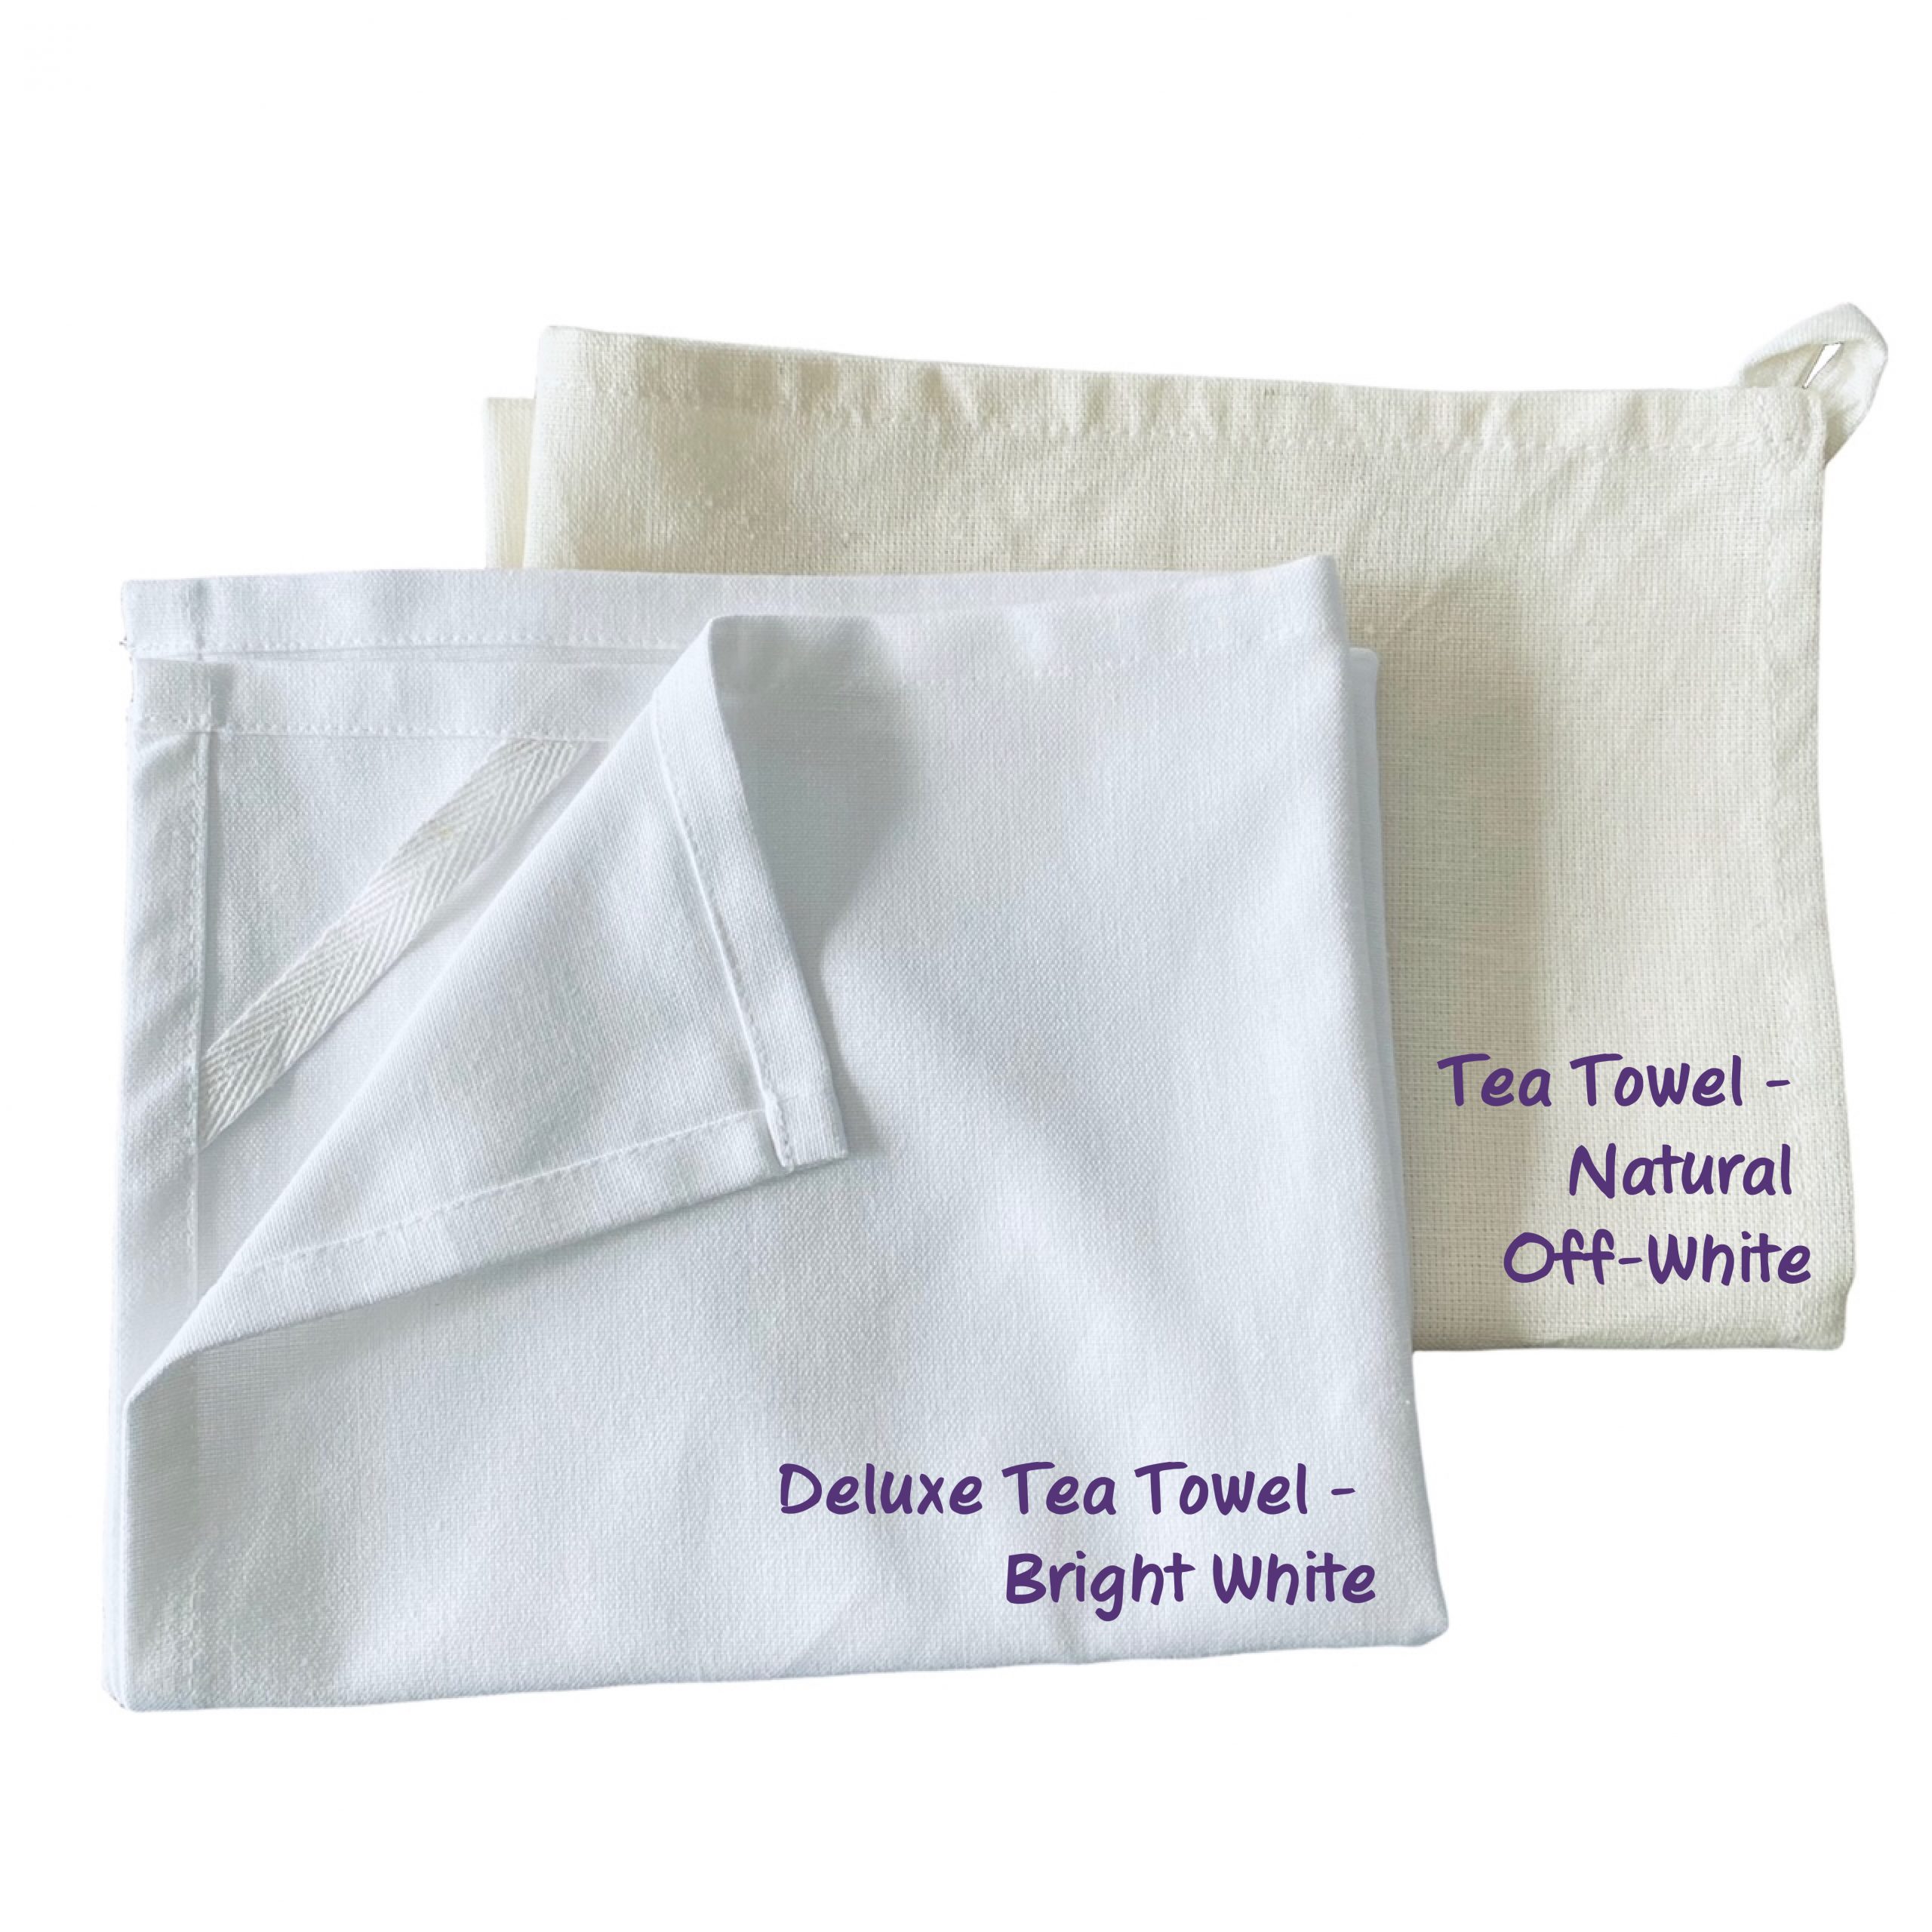 https://cottoncreations.com/content/uploads/2021/11/Deluxe-vs-regular-Tea-Towels-01-scaled.jpg